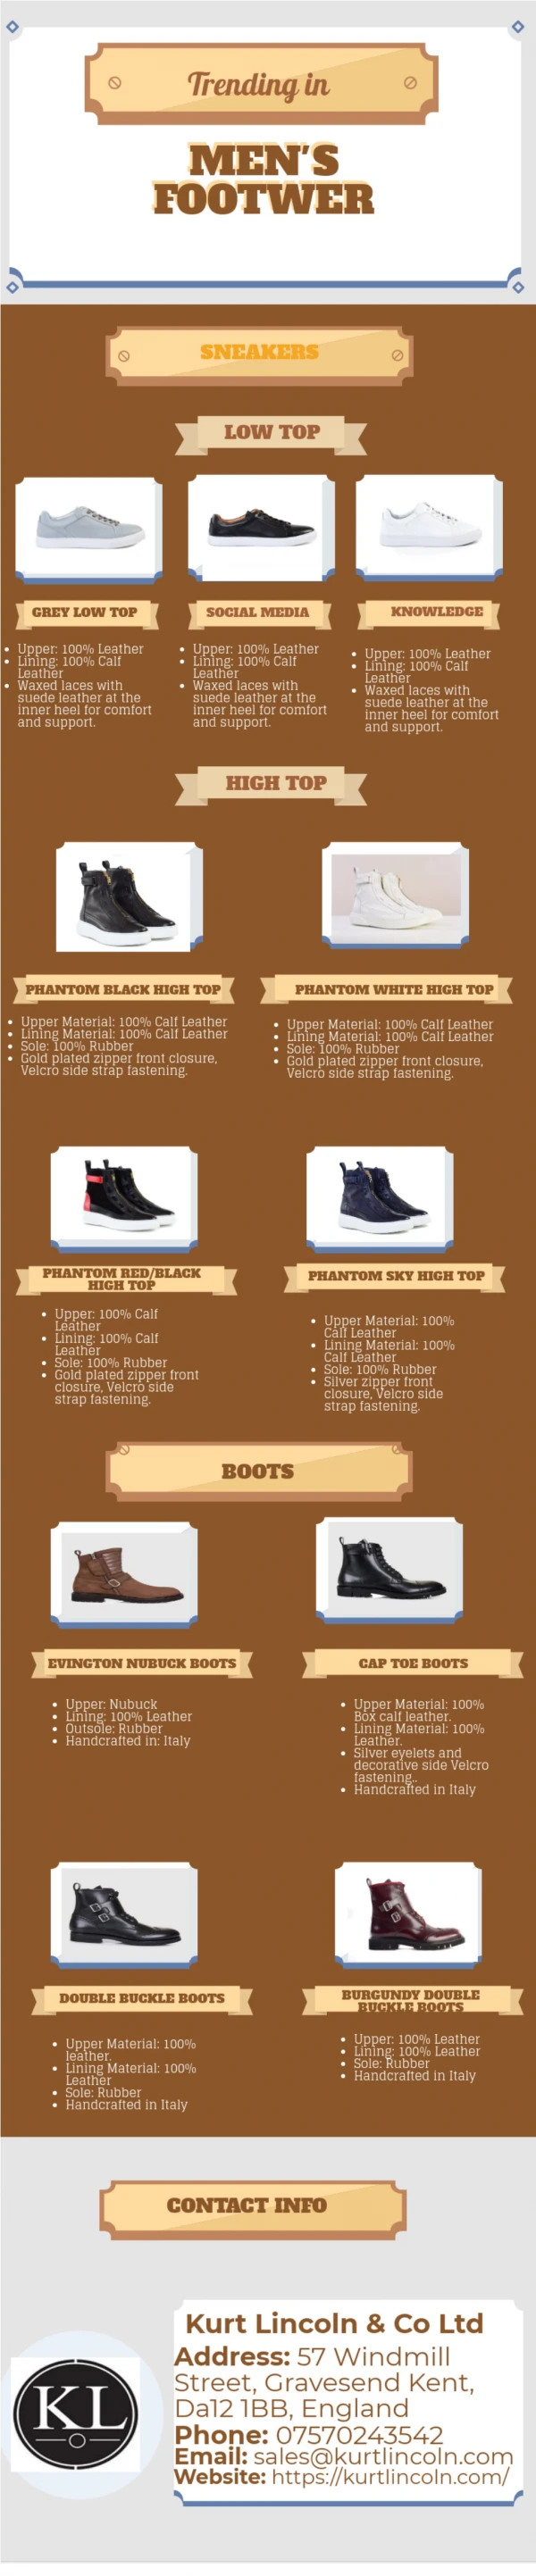 Latest Footwear Fashion Trends for Men